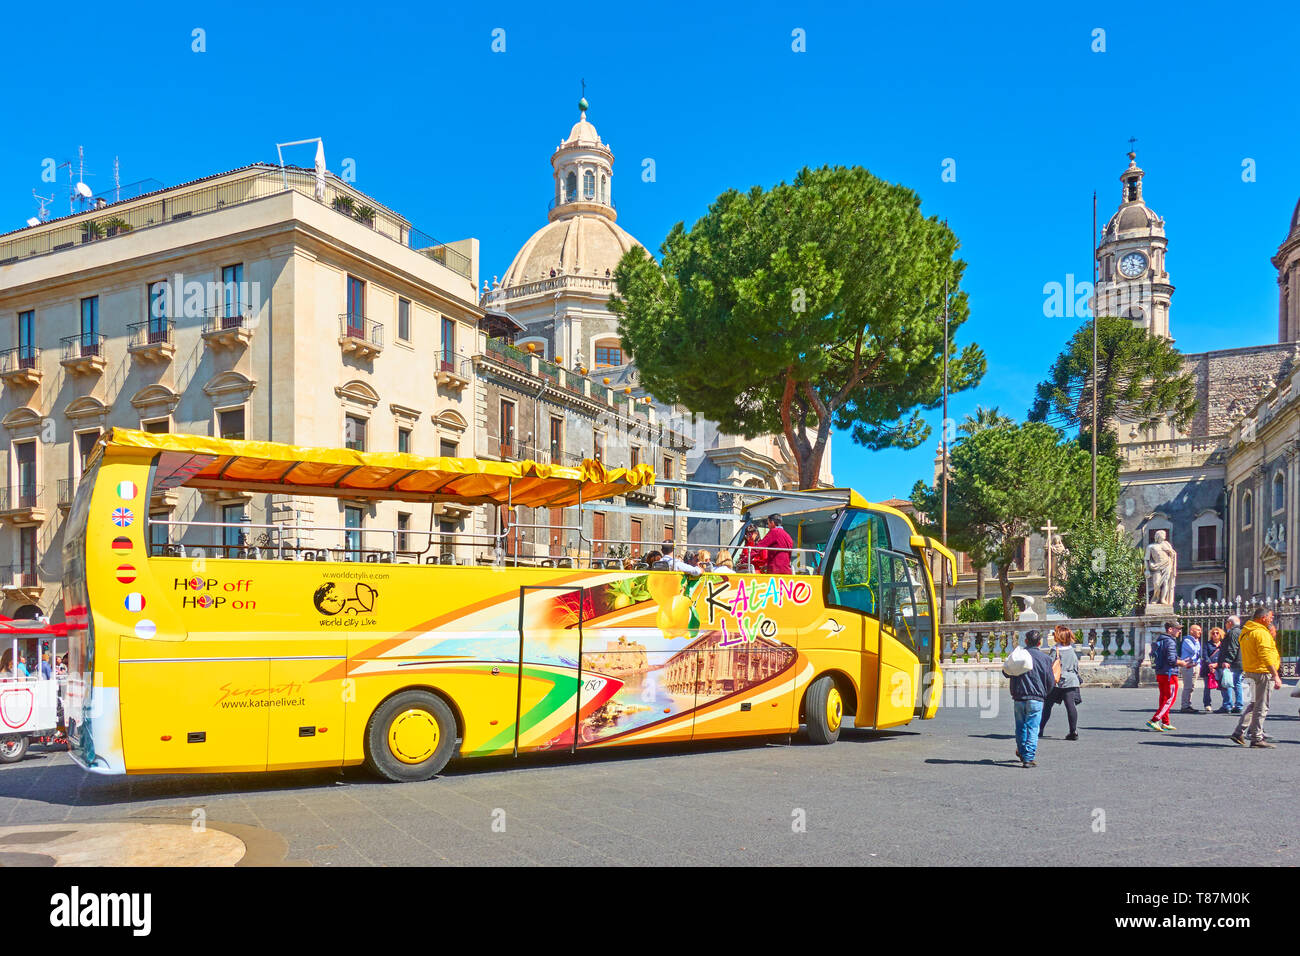 Catania, Italien - 16. März 2019: Gelb Hop-on-Hop-off-Bus an der Piazza del Duomo in Catania, Sizilien Stockfoto